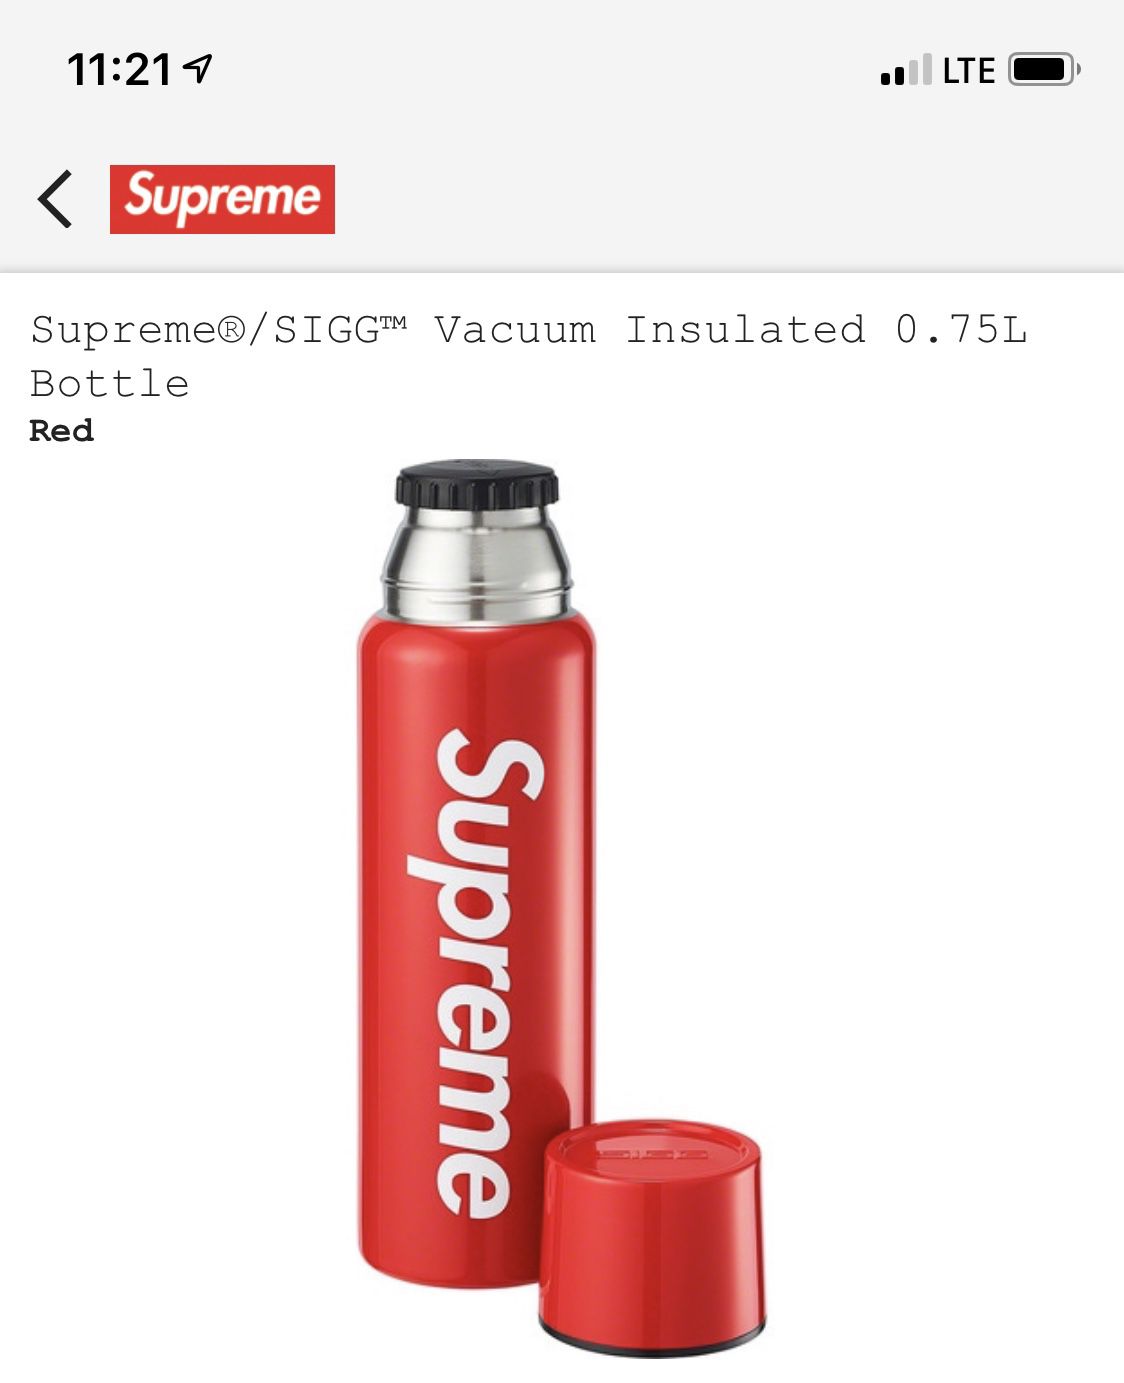 Supreme/ Sigg Vacuum Insulated Bottle